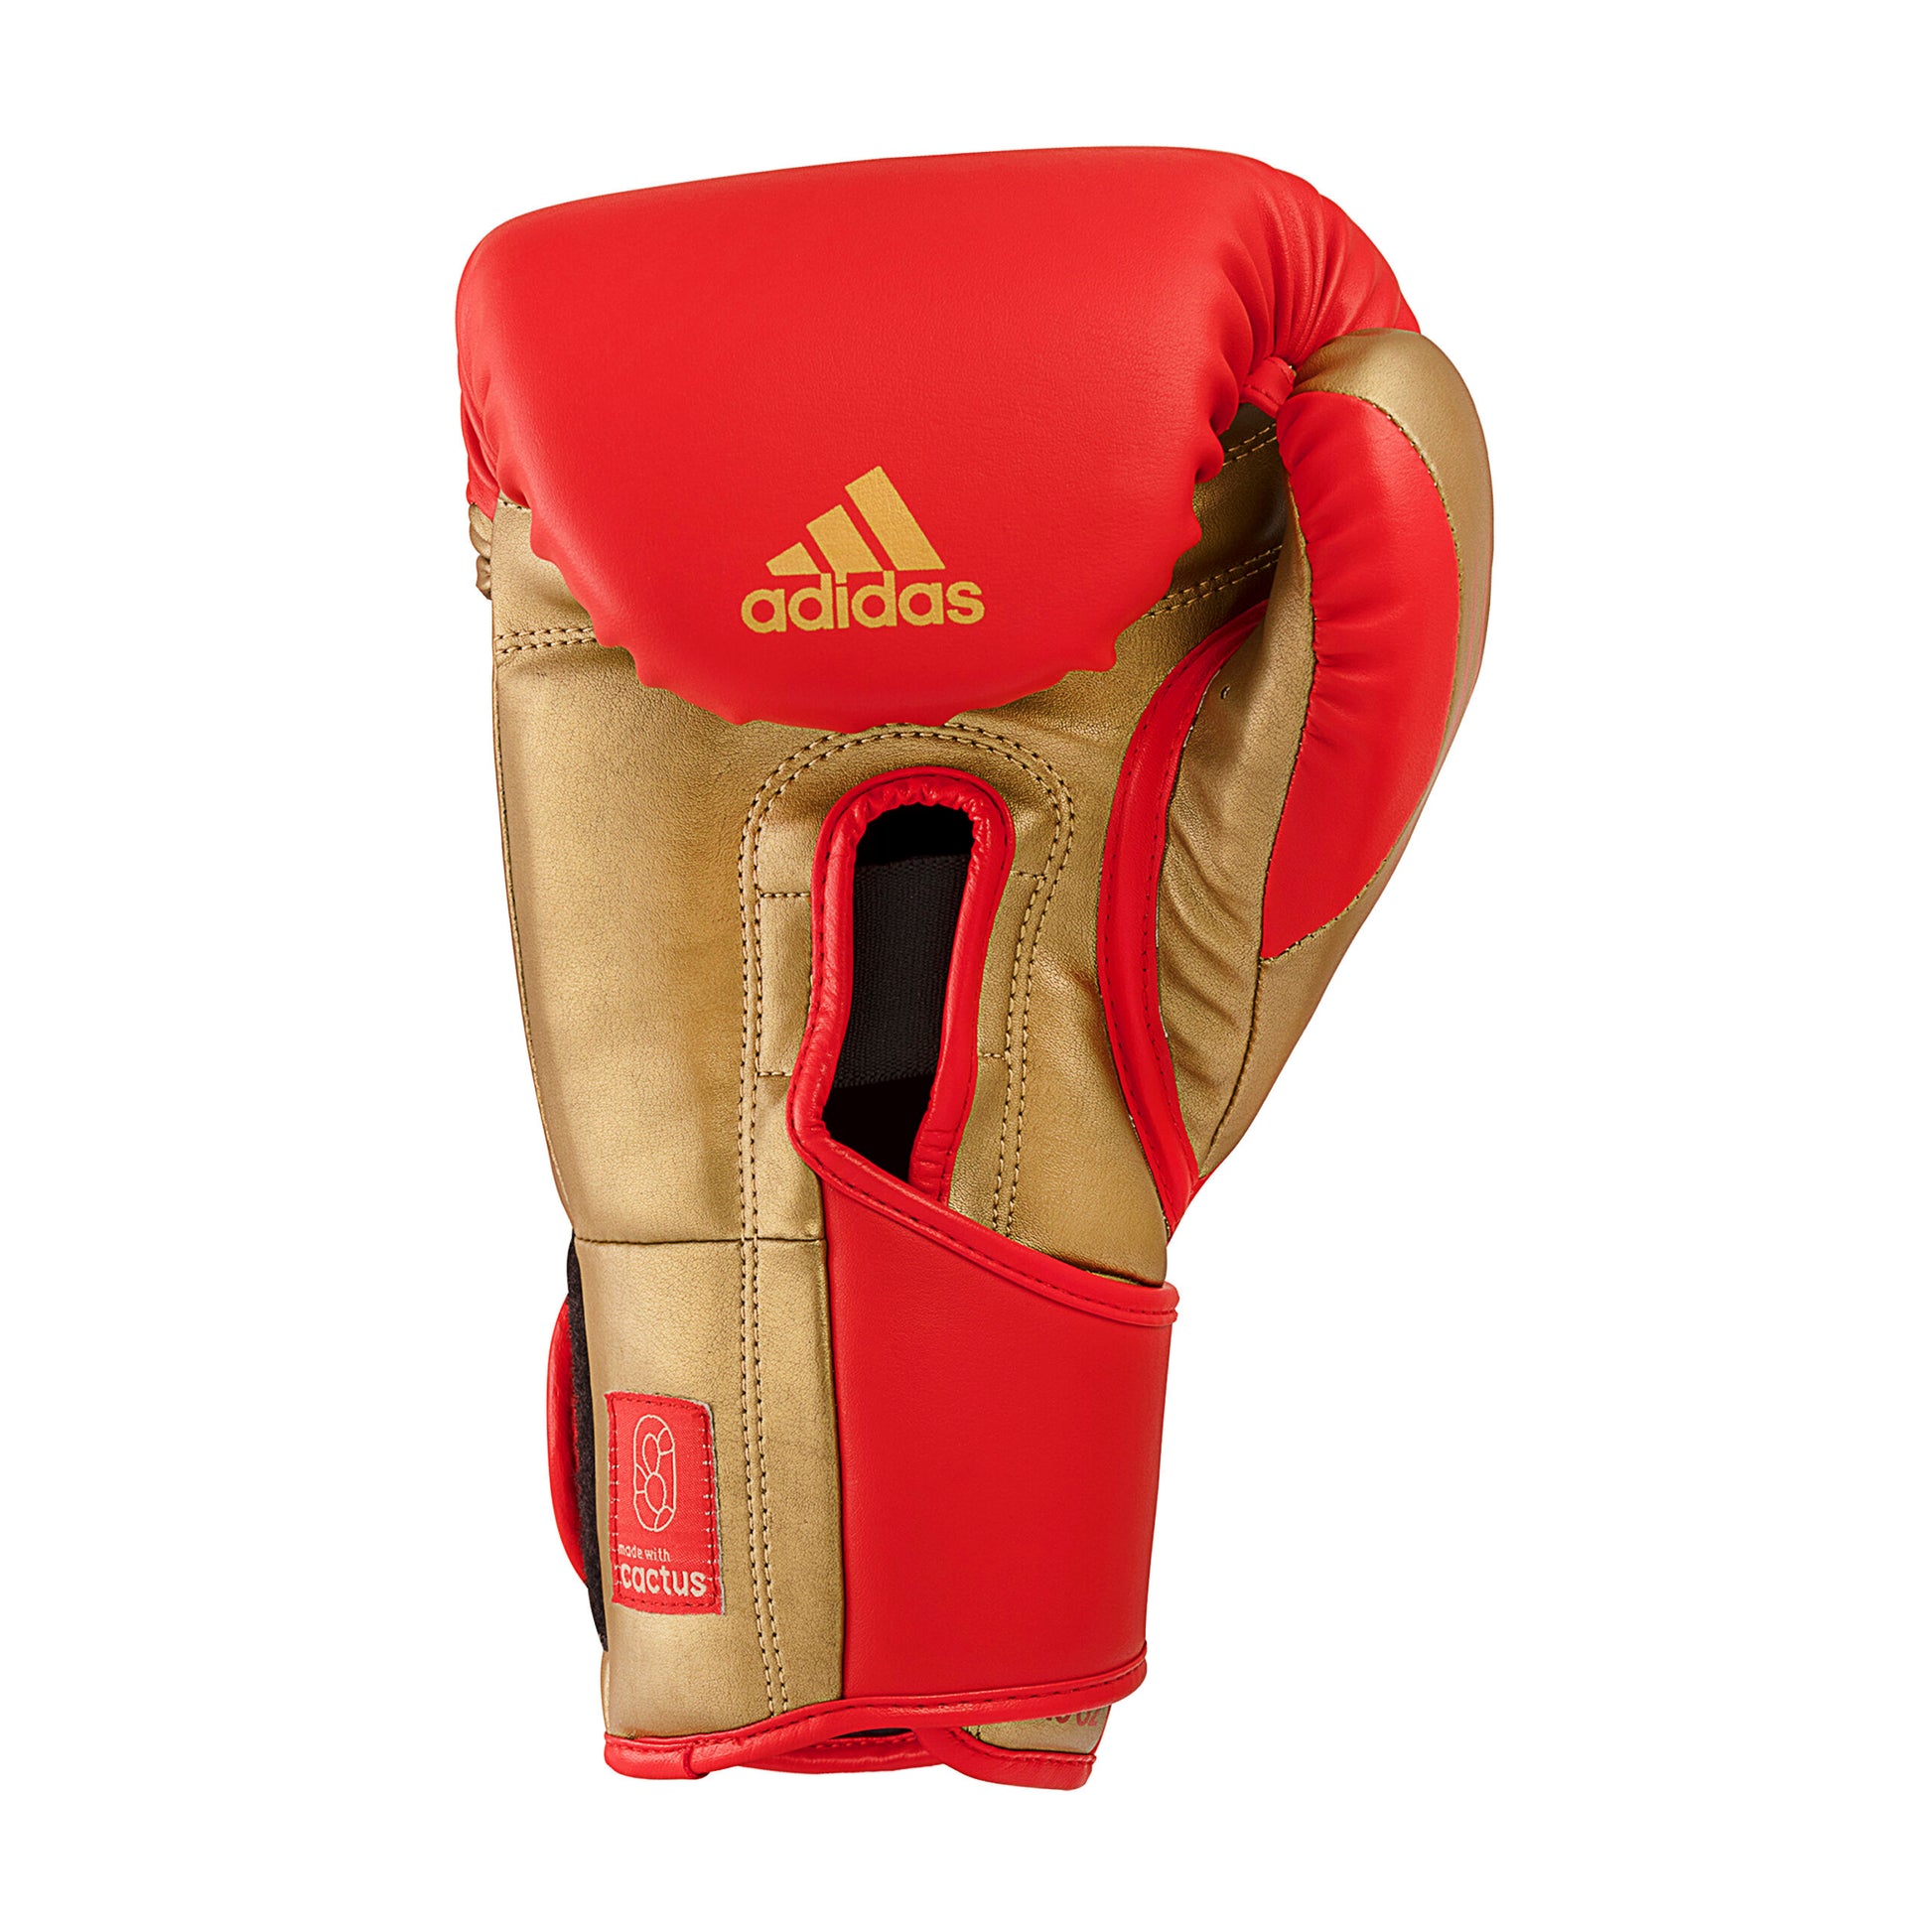 Adispd350tg Adidas Tilt 350 Pro Training Boxing Gloves Velcro Strap Red Gold 03